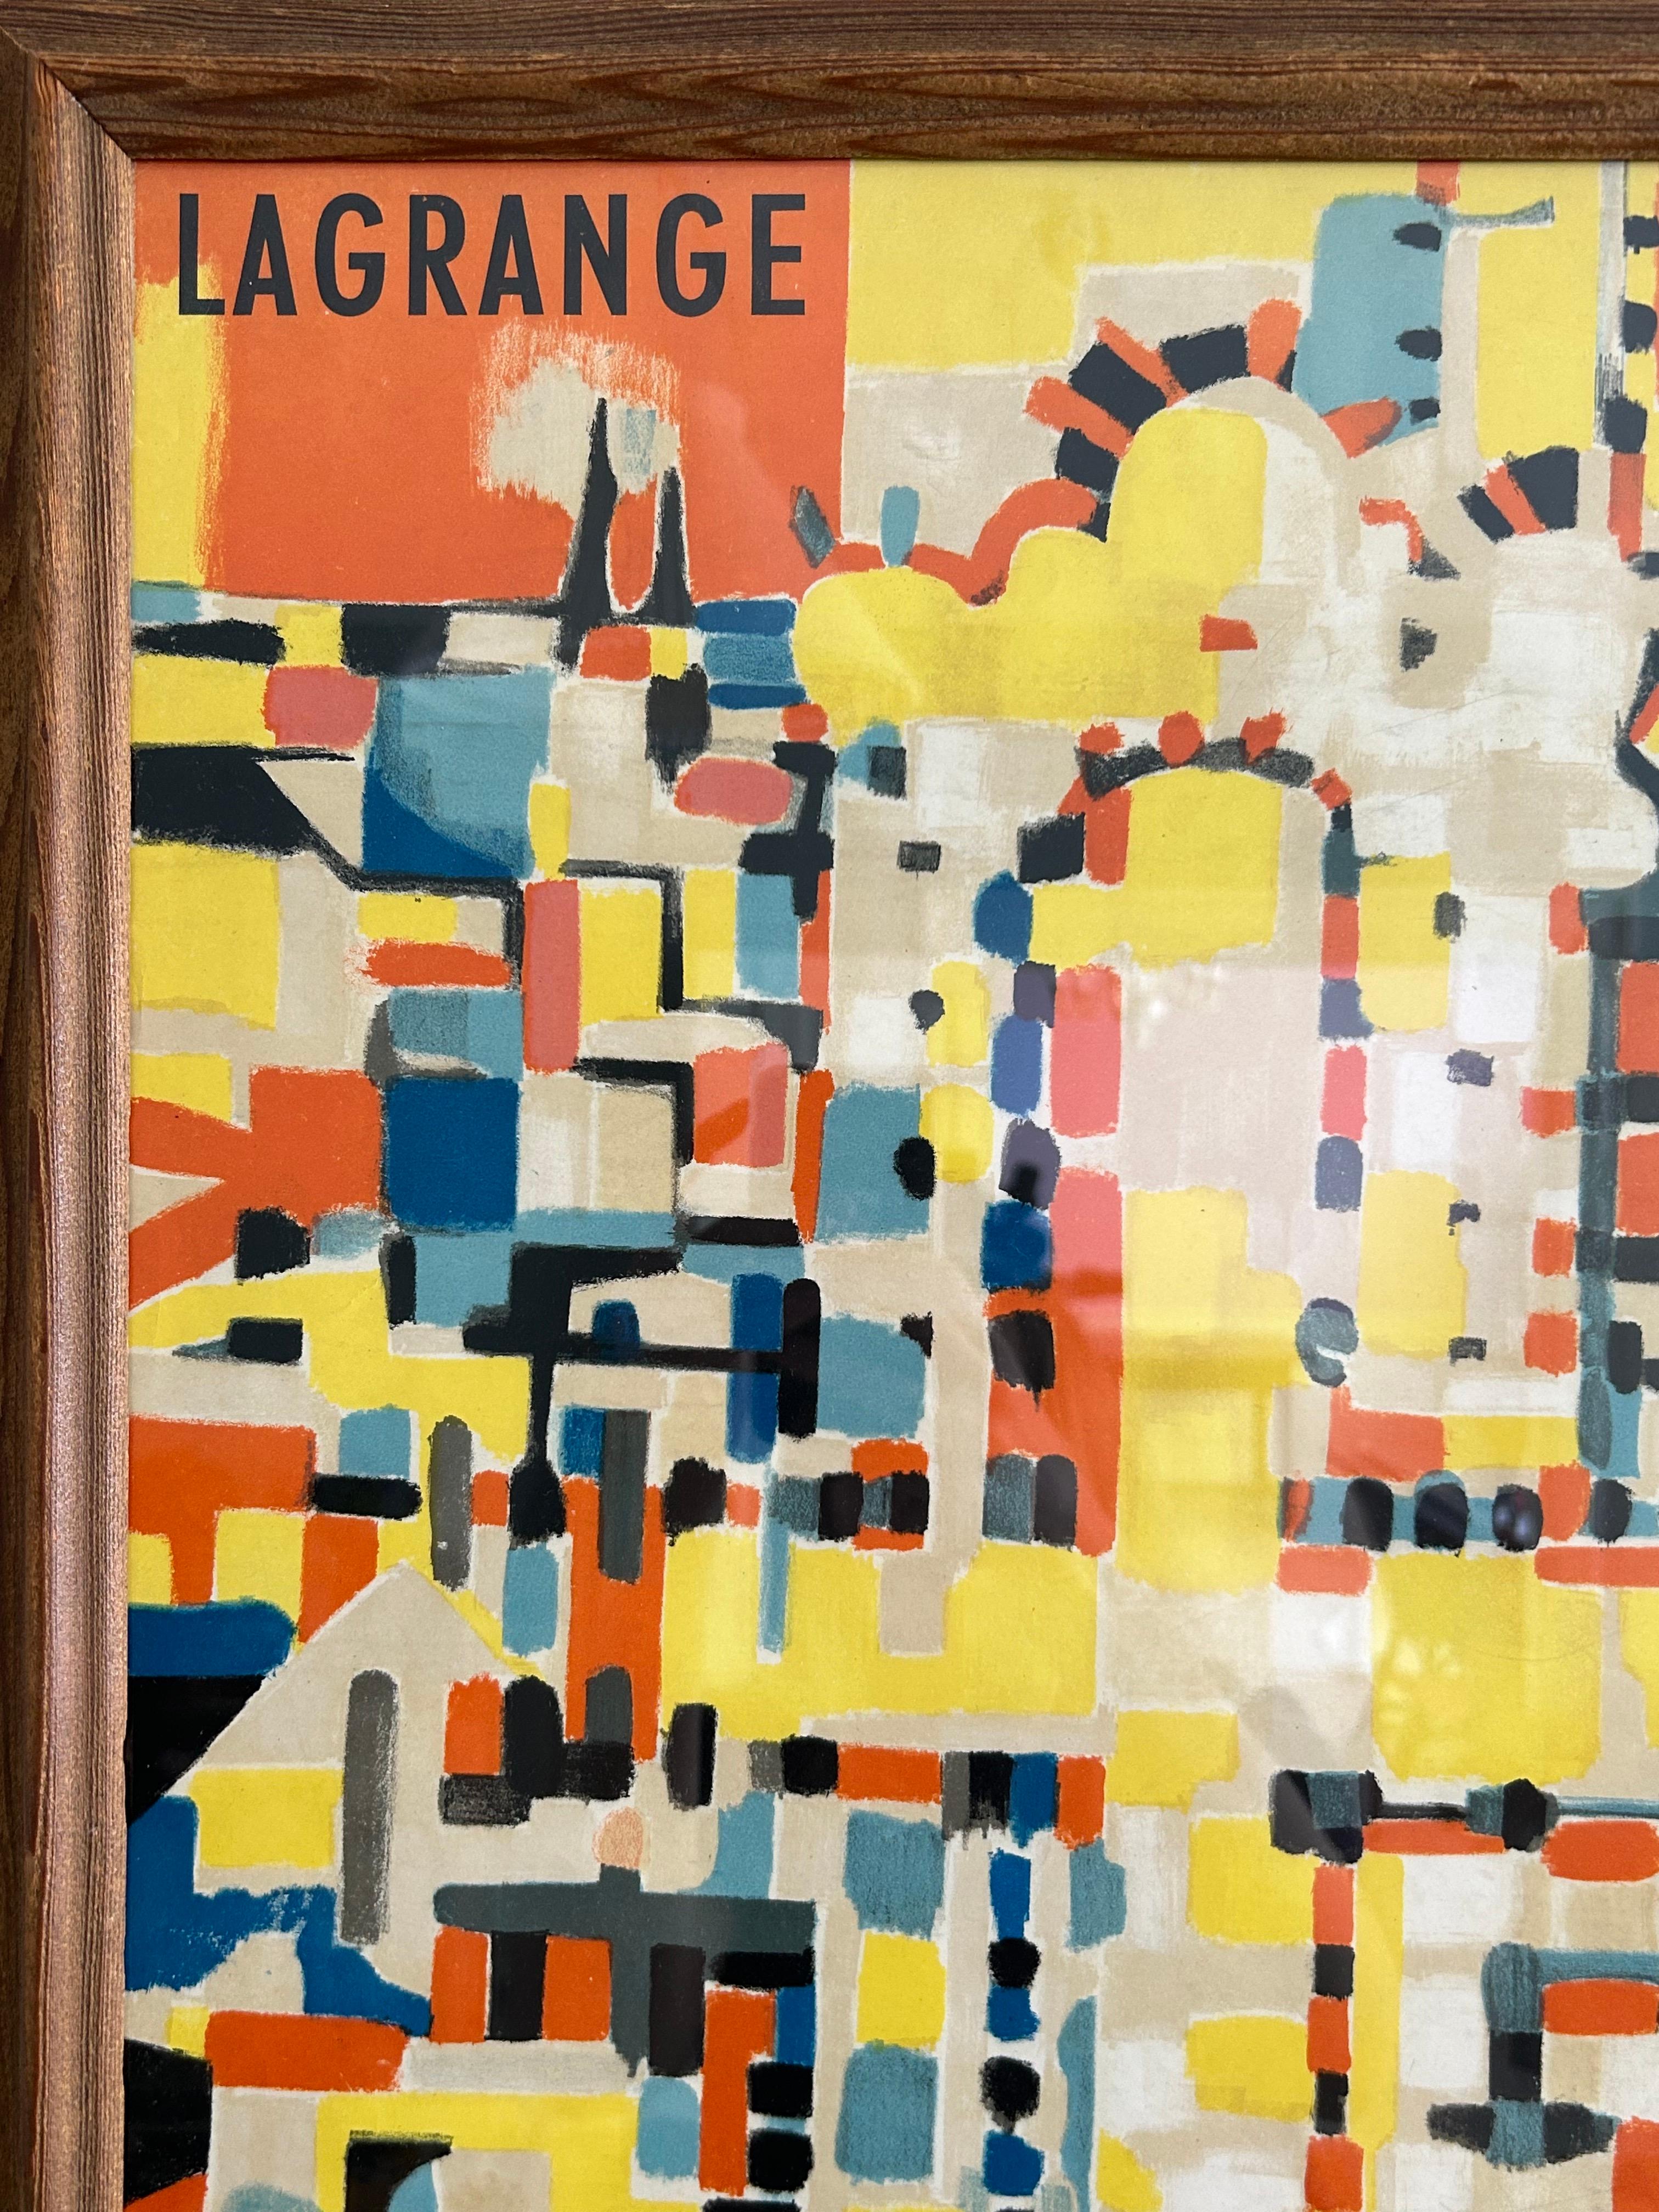 Vintage Jacques Lagrange Galerie Villand Exhibition Poster, France, 1959 For Sale 2